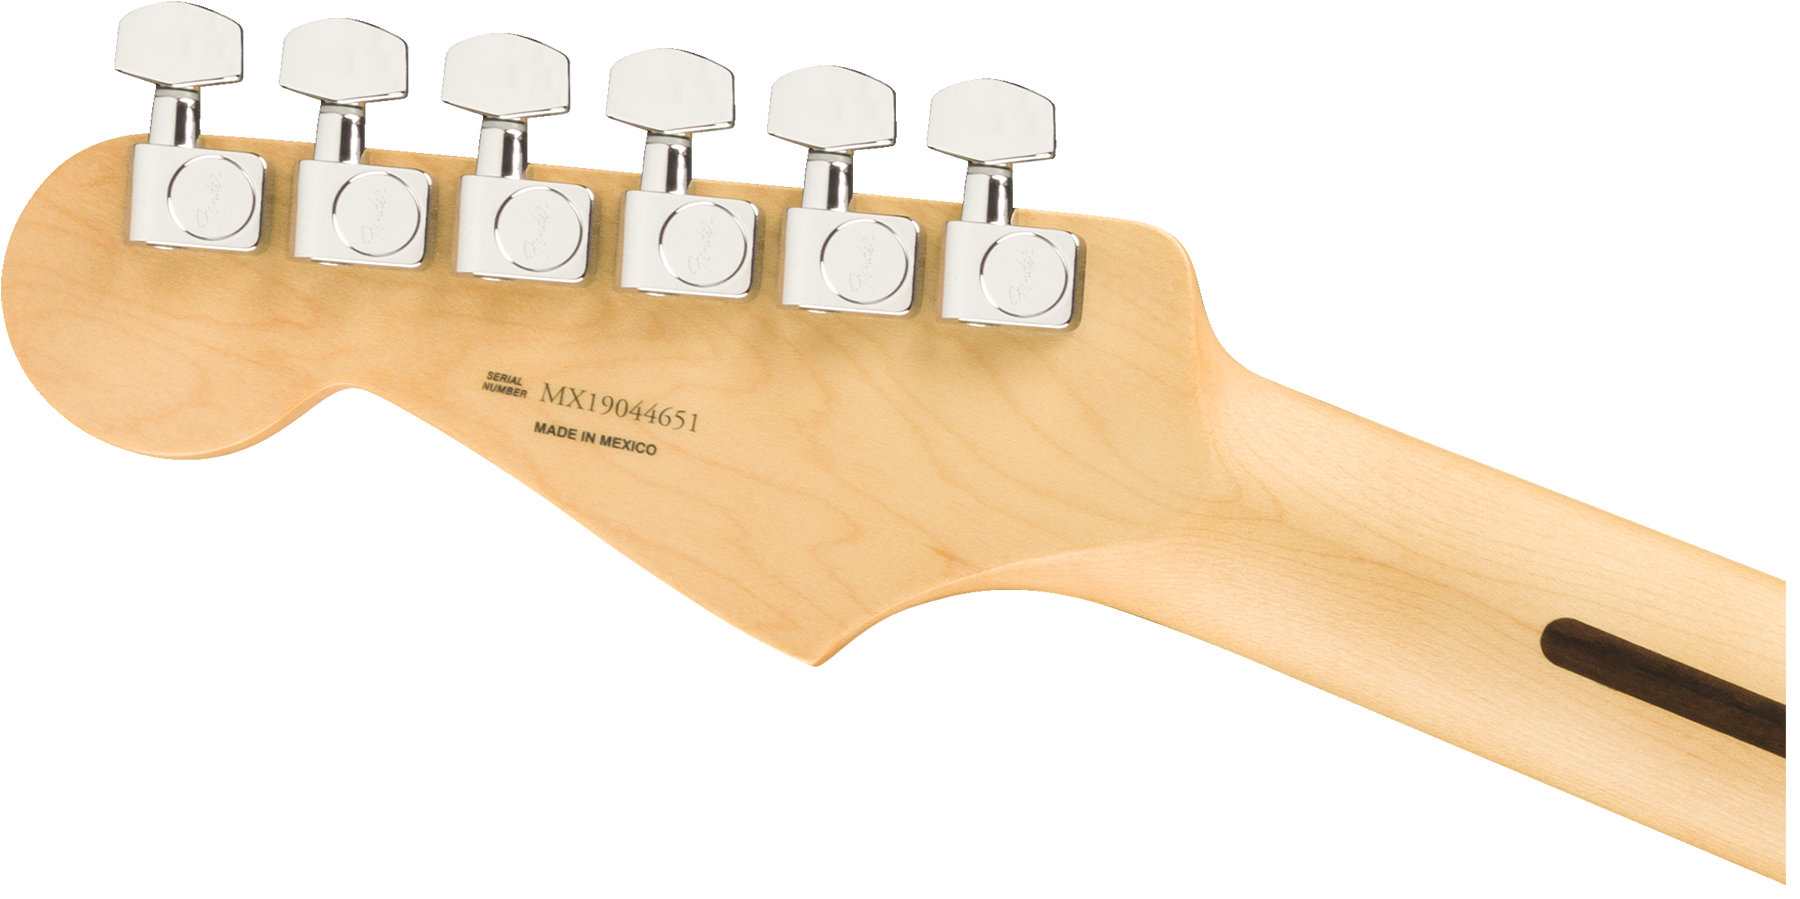 Fender Strat Player Mex 3s Trem Pf - Silver - Guitarra eléctrica con forma de str. - Variation 3